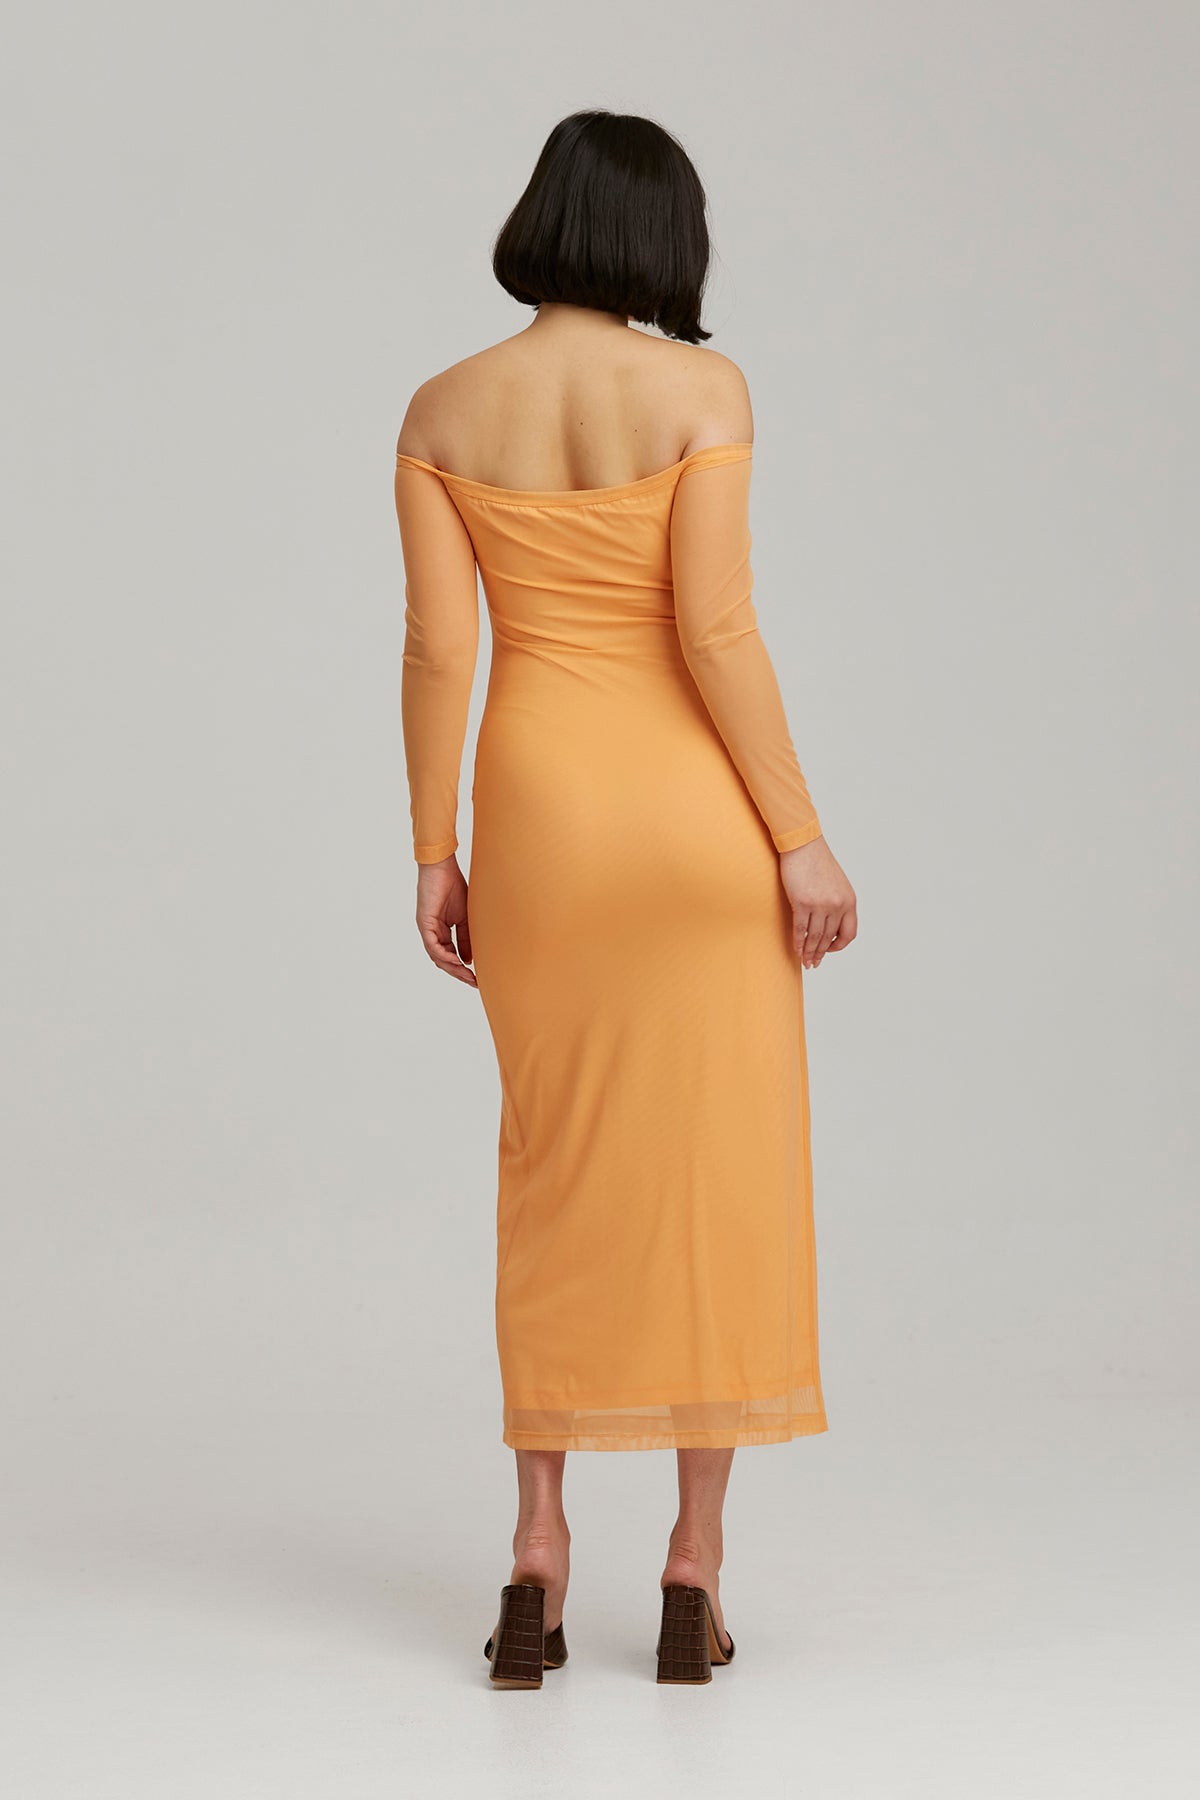 The Fifth Label - Hibiscus LS Dress - Papaya